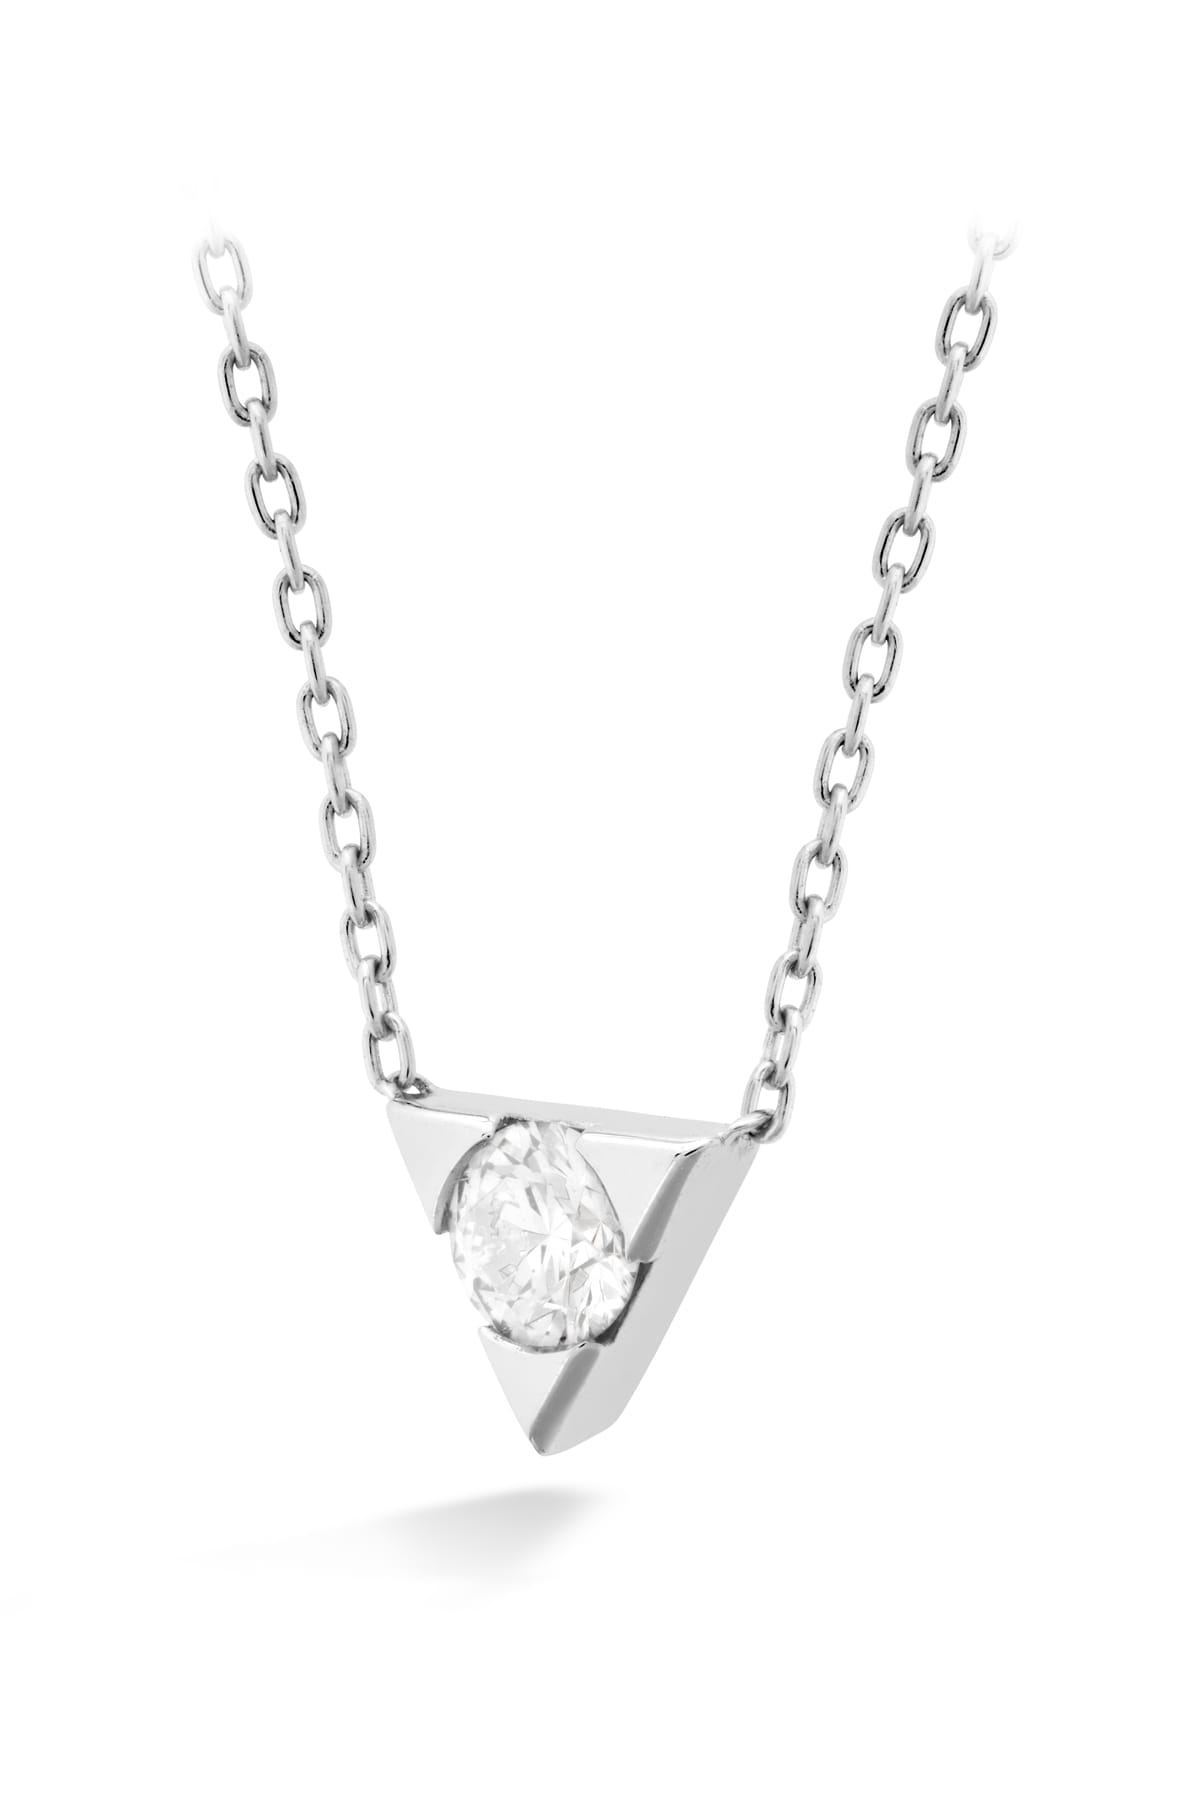 Triplicity Single Diamond Pendant From Hearts On Fire available at LeGassick Diamonds and Jewellery Gold Coast, Australia.